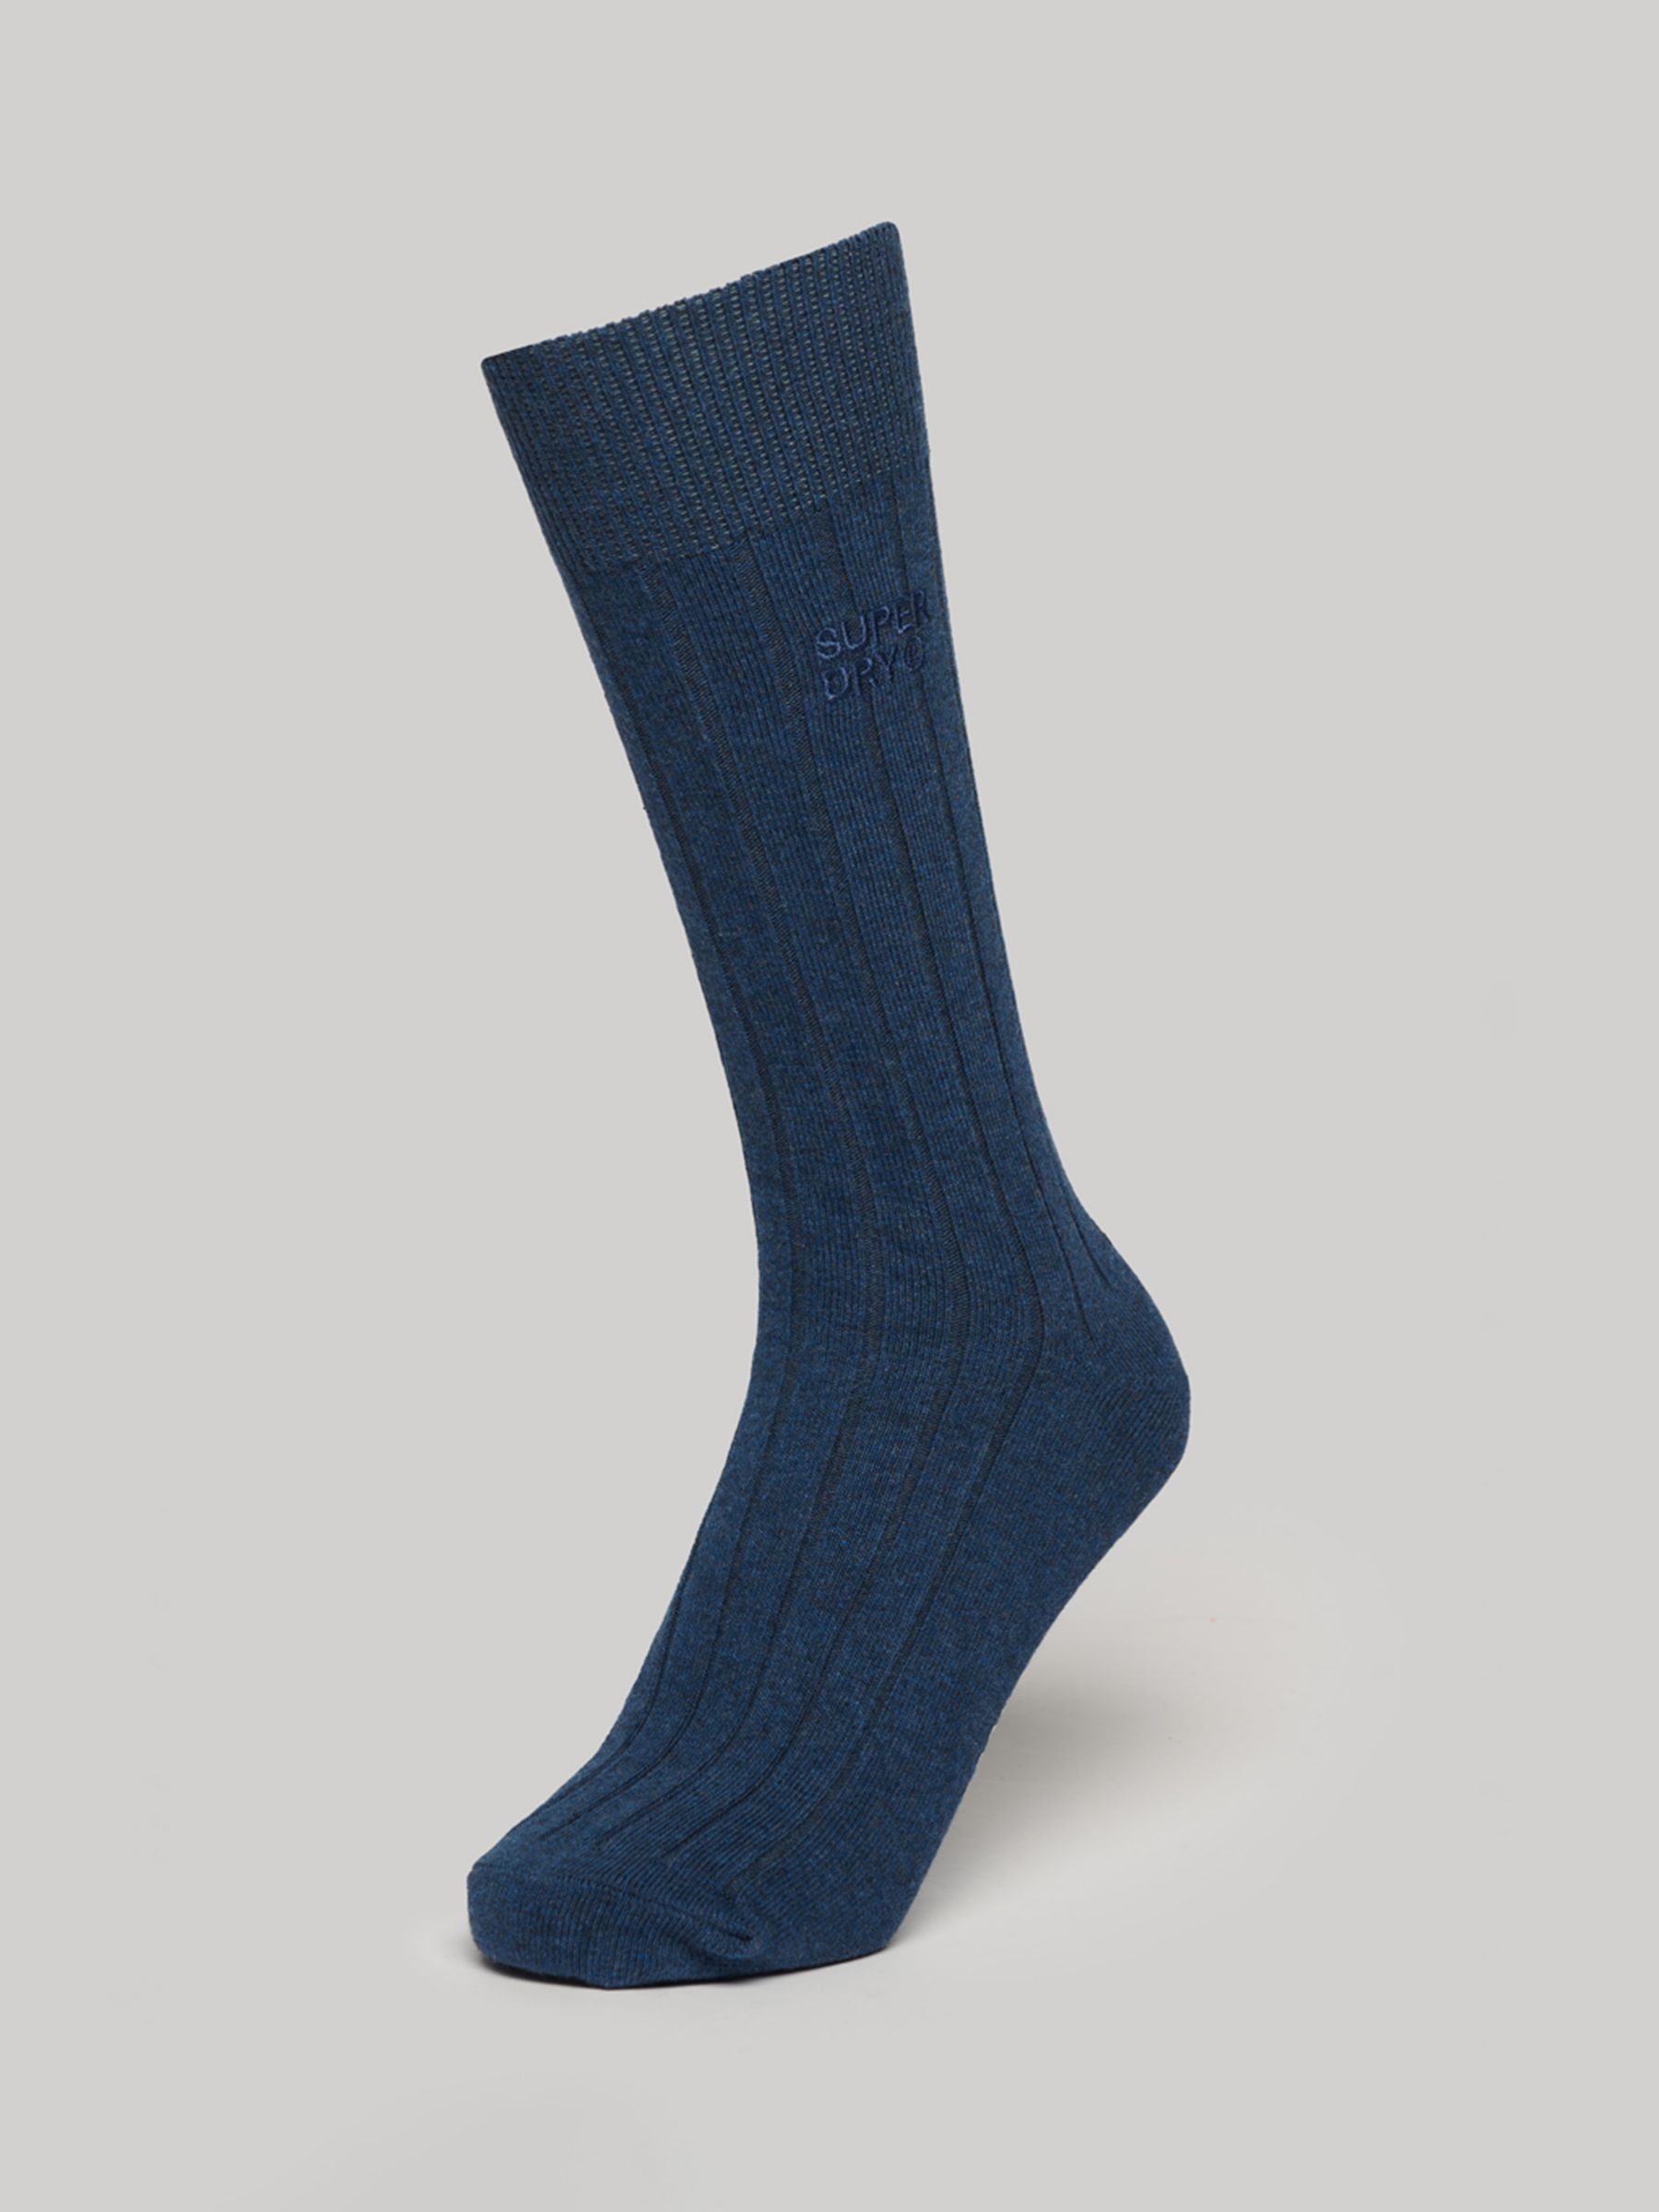 Superdry Unisex Organic Cotton Blend Core Rib Crew Socks, Pack of 3 ...